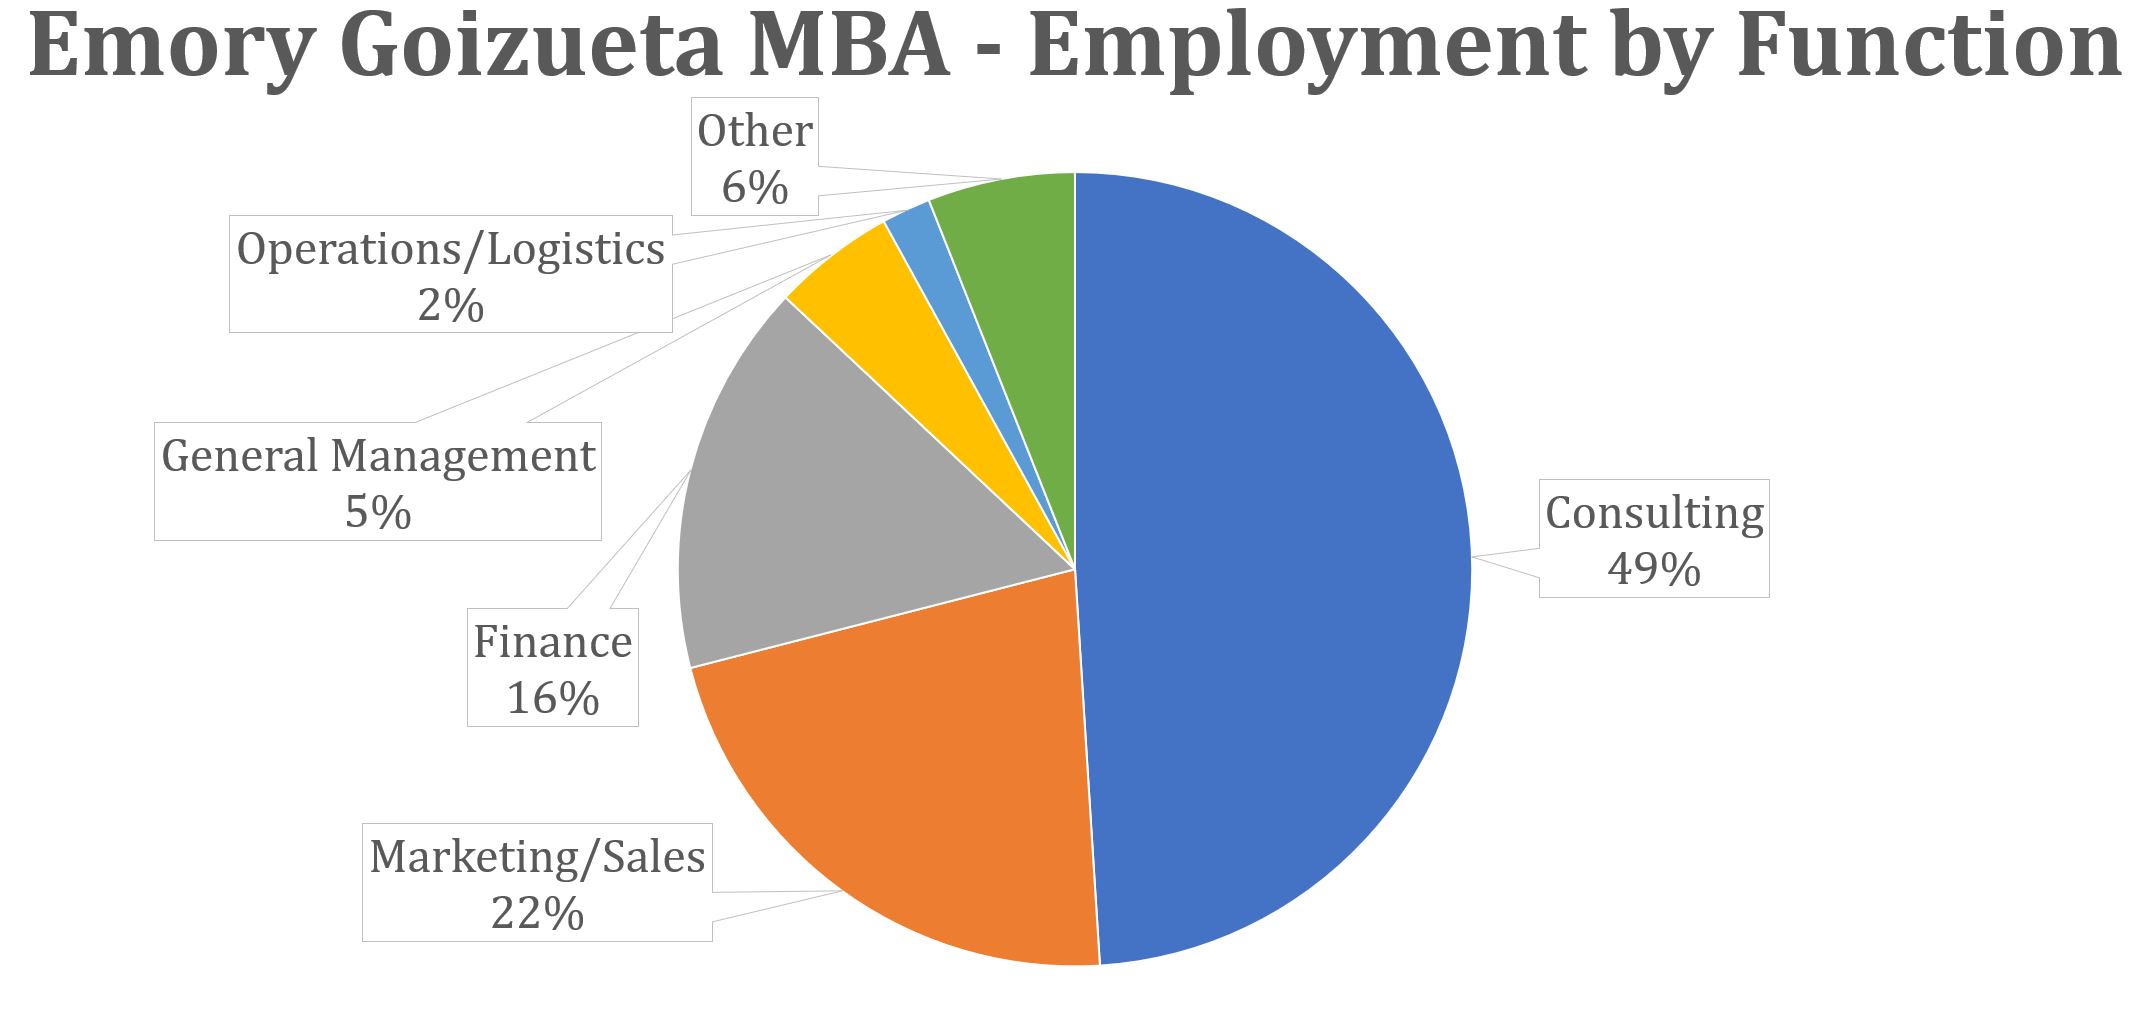 Emory Goizueta MBA - Employment by Function